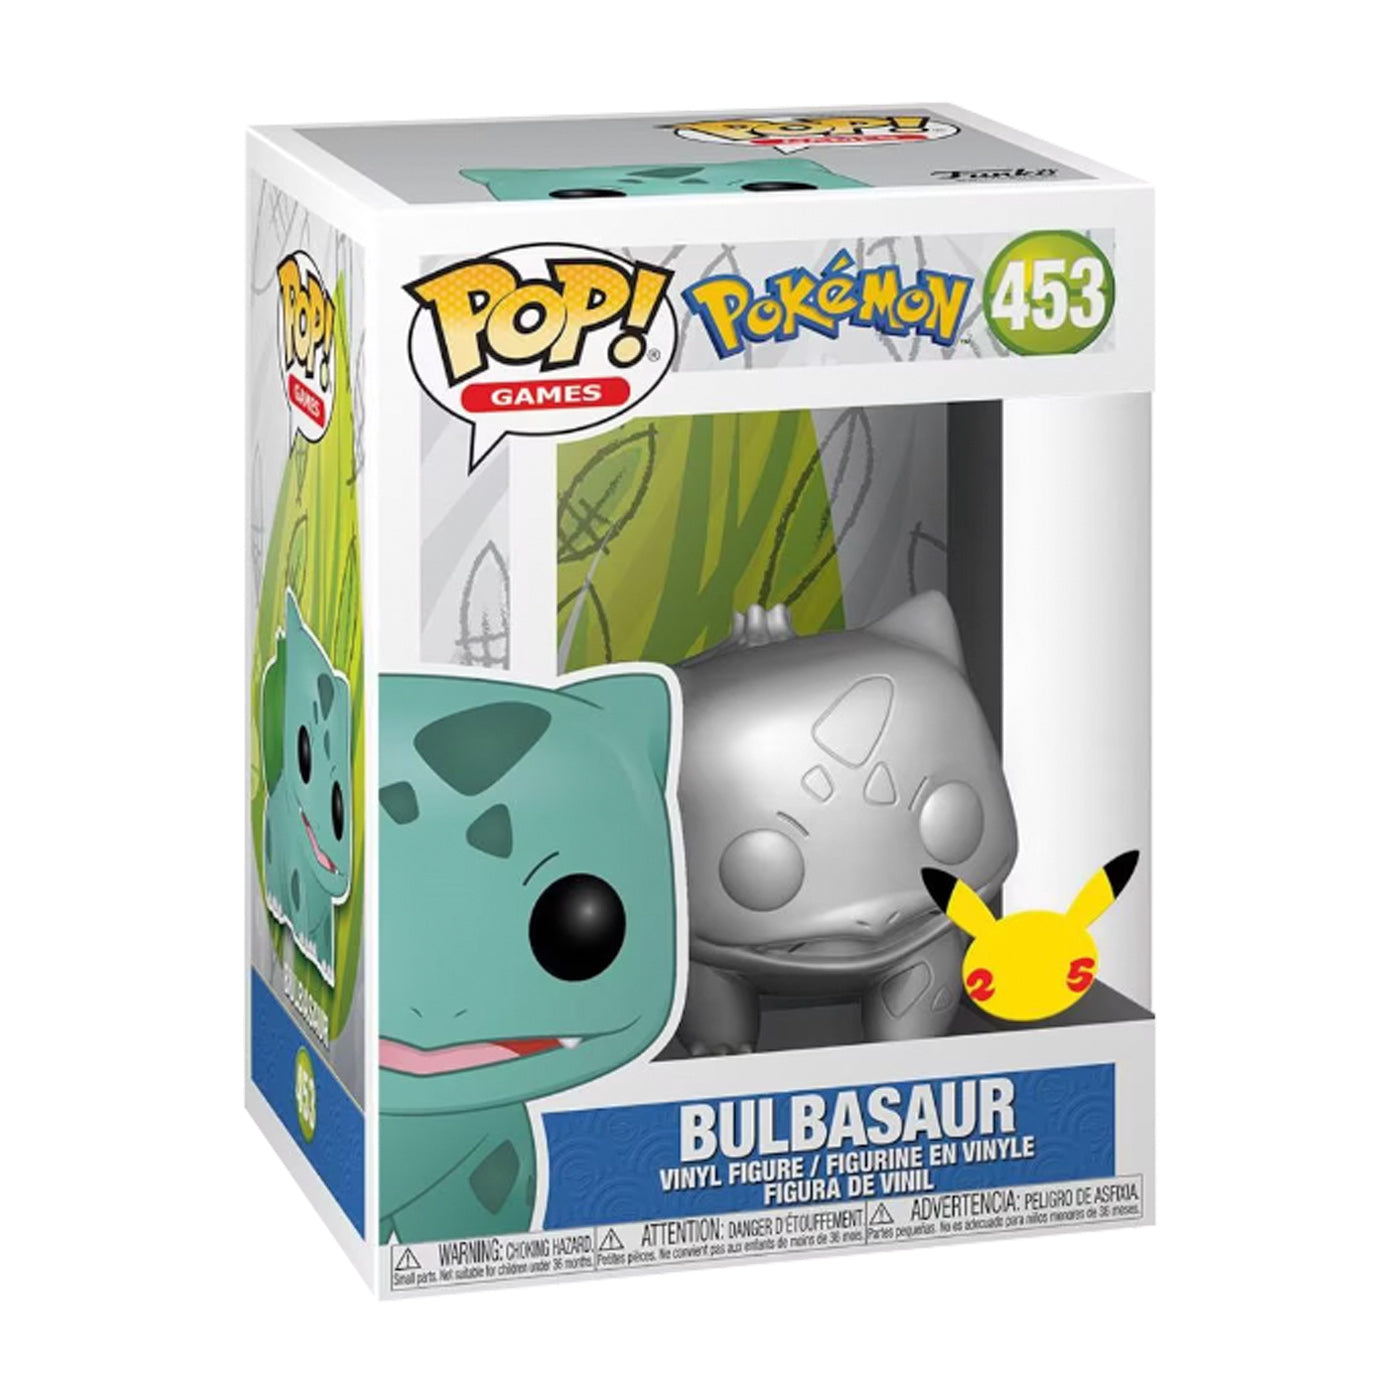 Funko Pop Games: Bulbasaur (453)